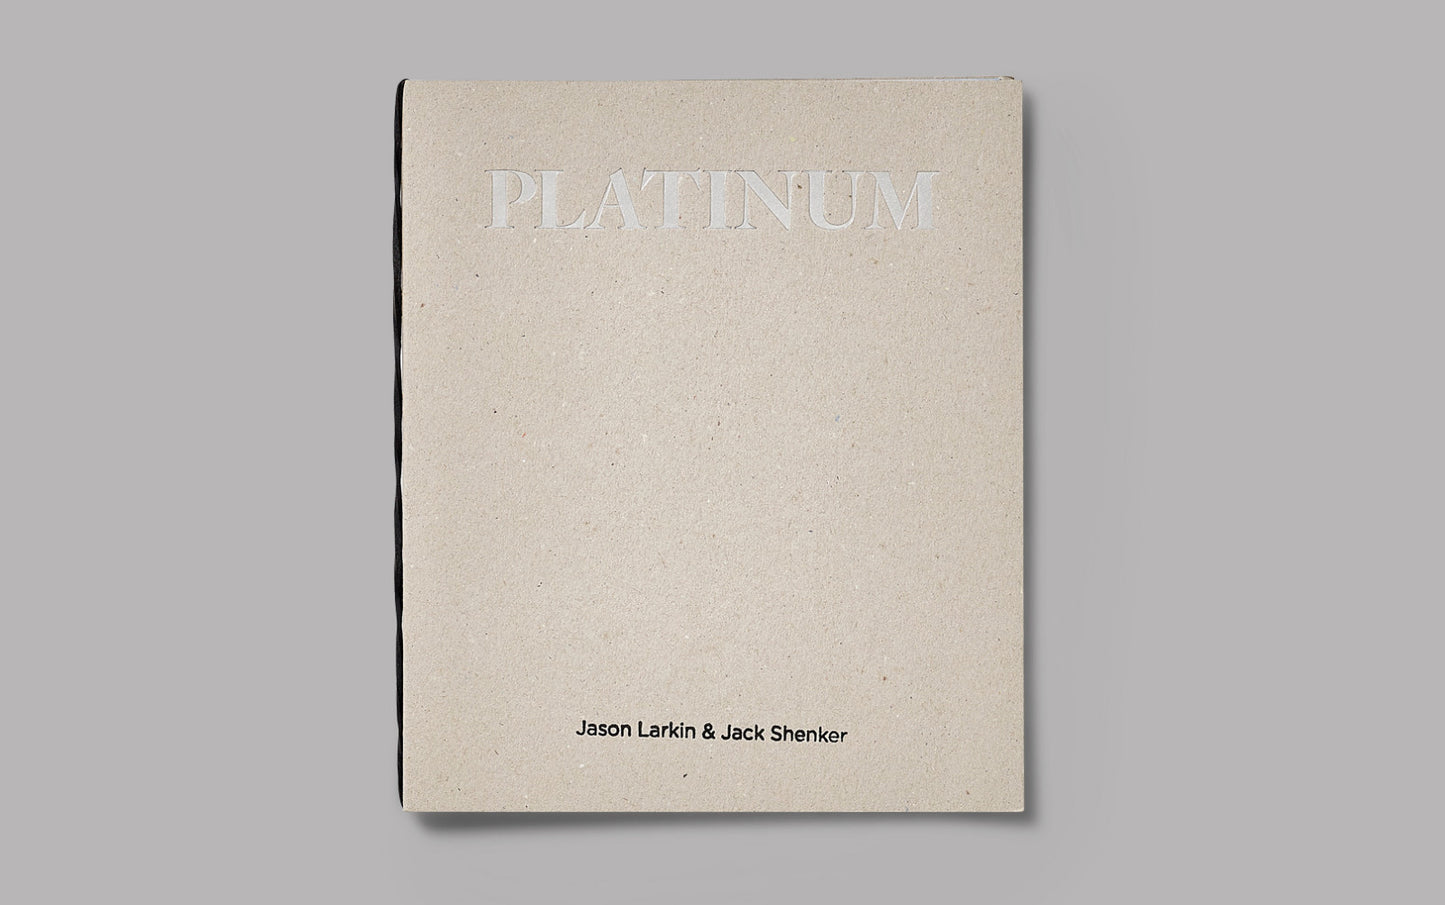 Platinum, by Jason Larkin and Jack Shenker